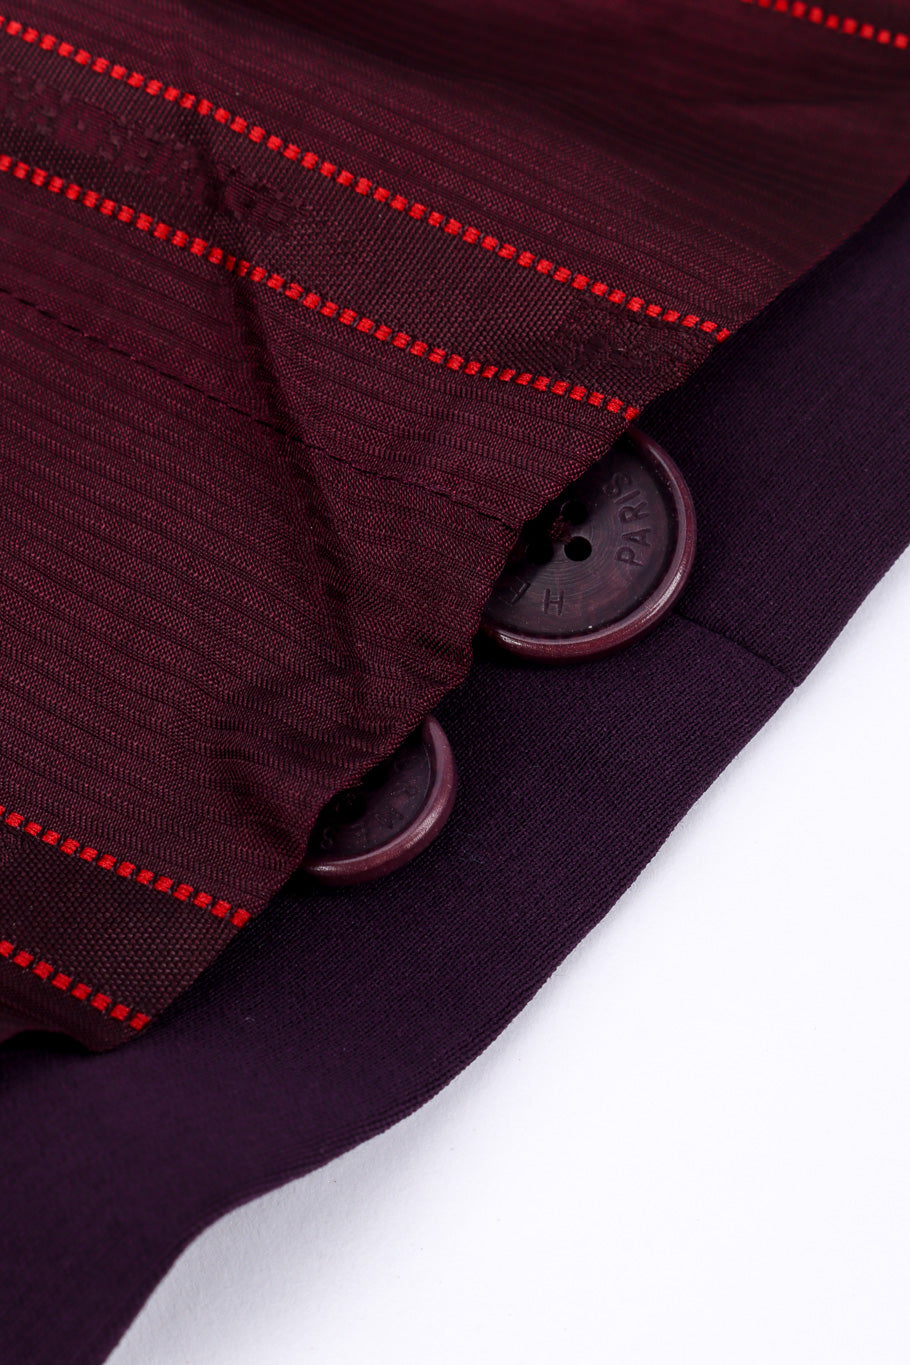 Vintage Hermés Asymmetrical Blazer and Skirt Set additional buttons closeup @recessla